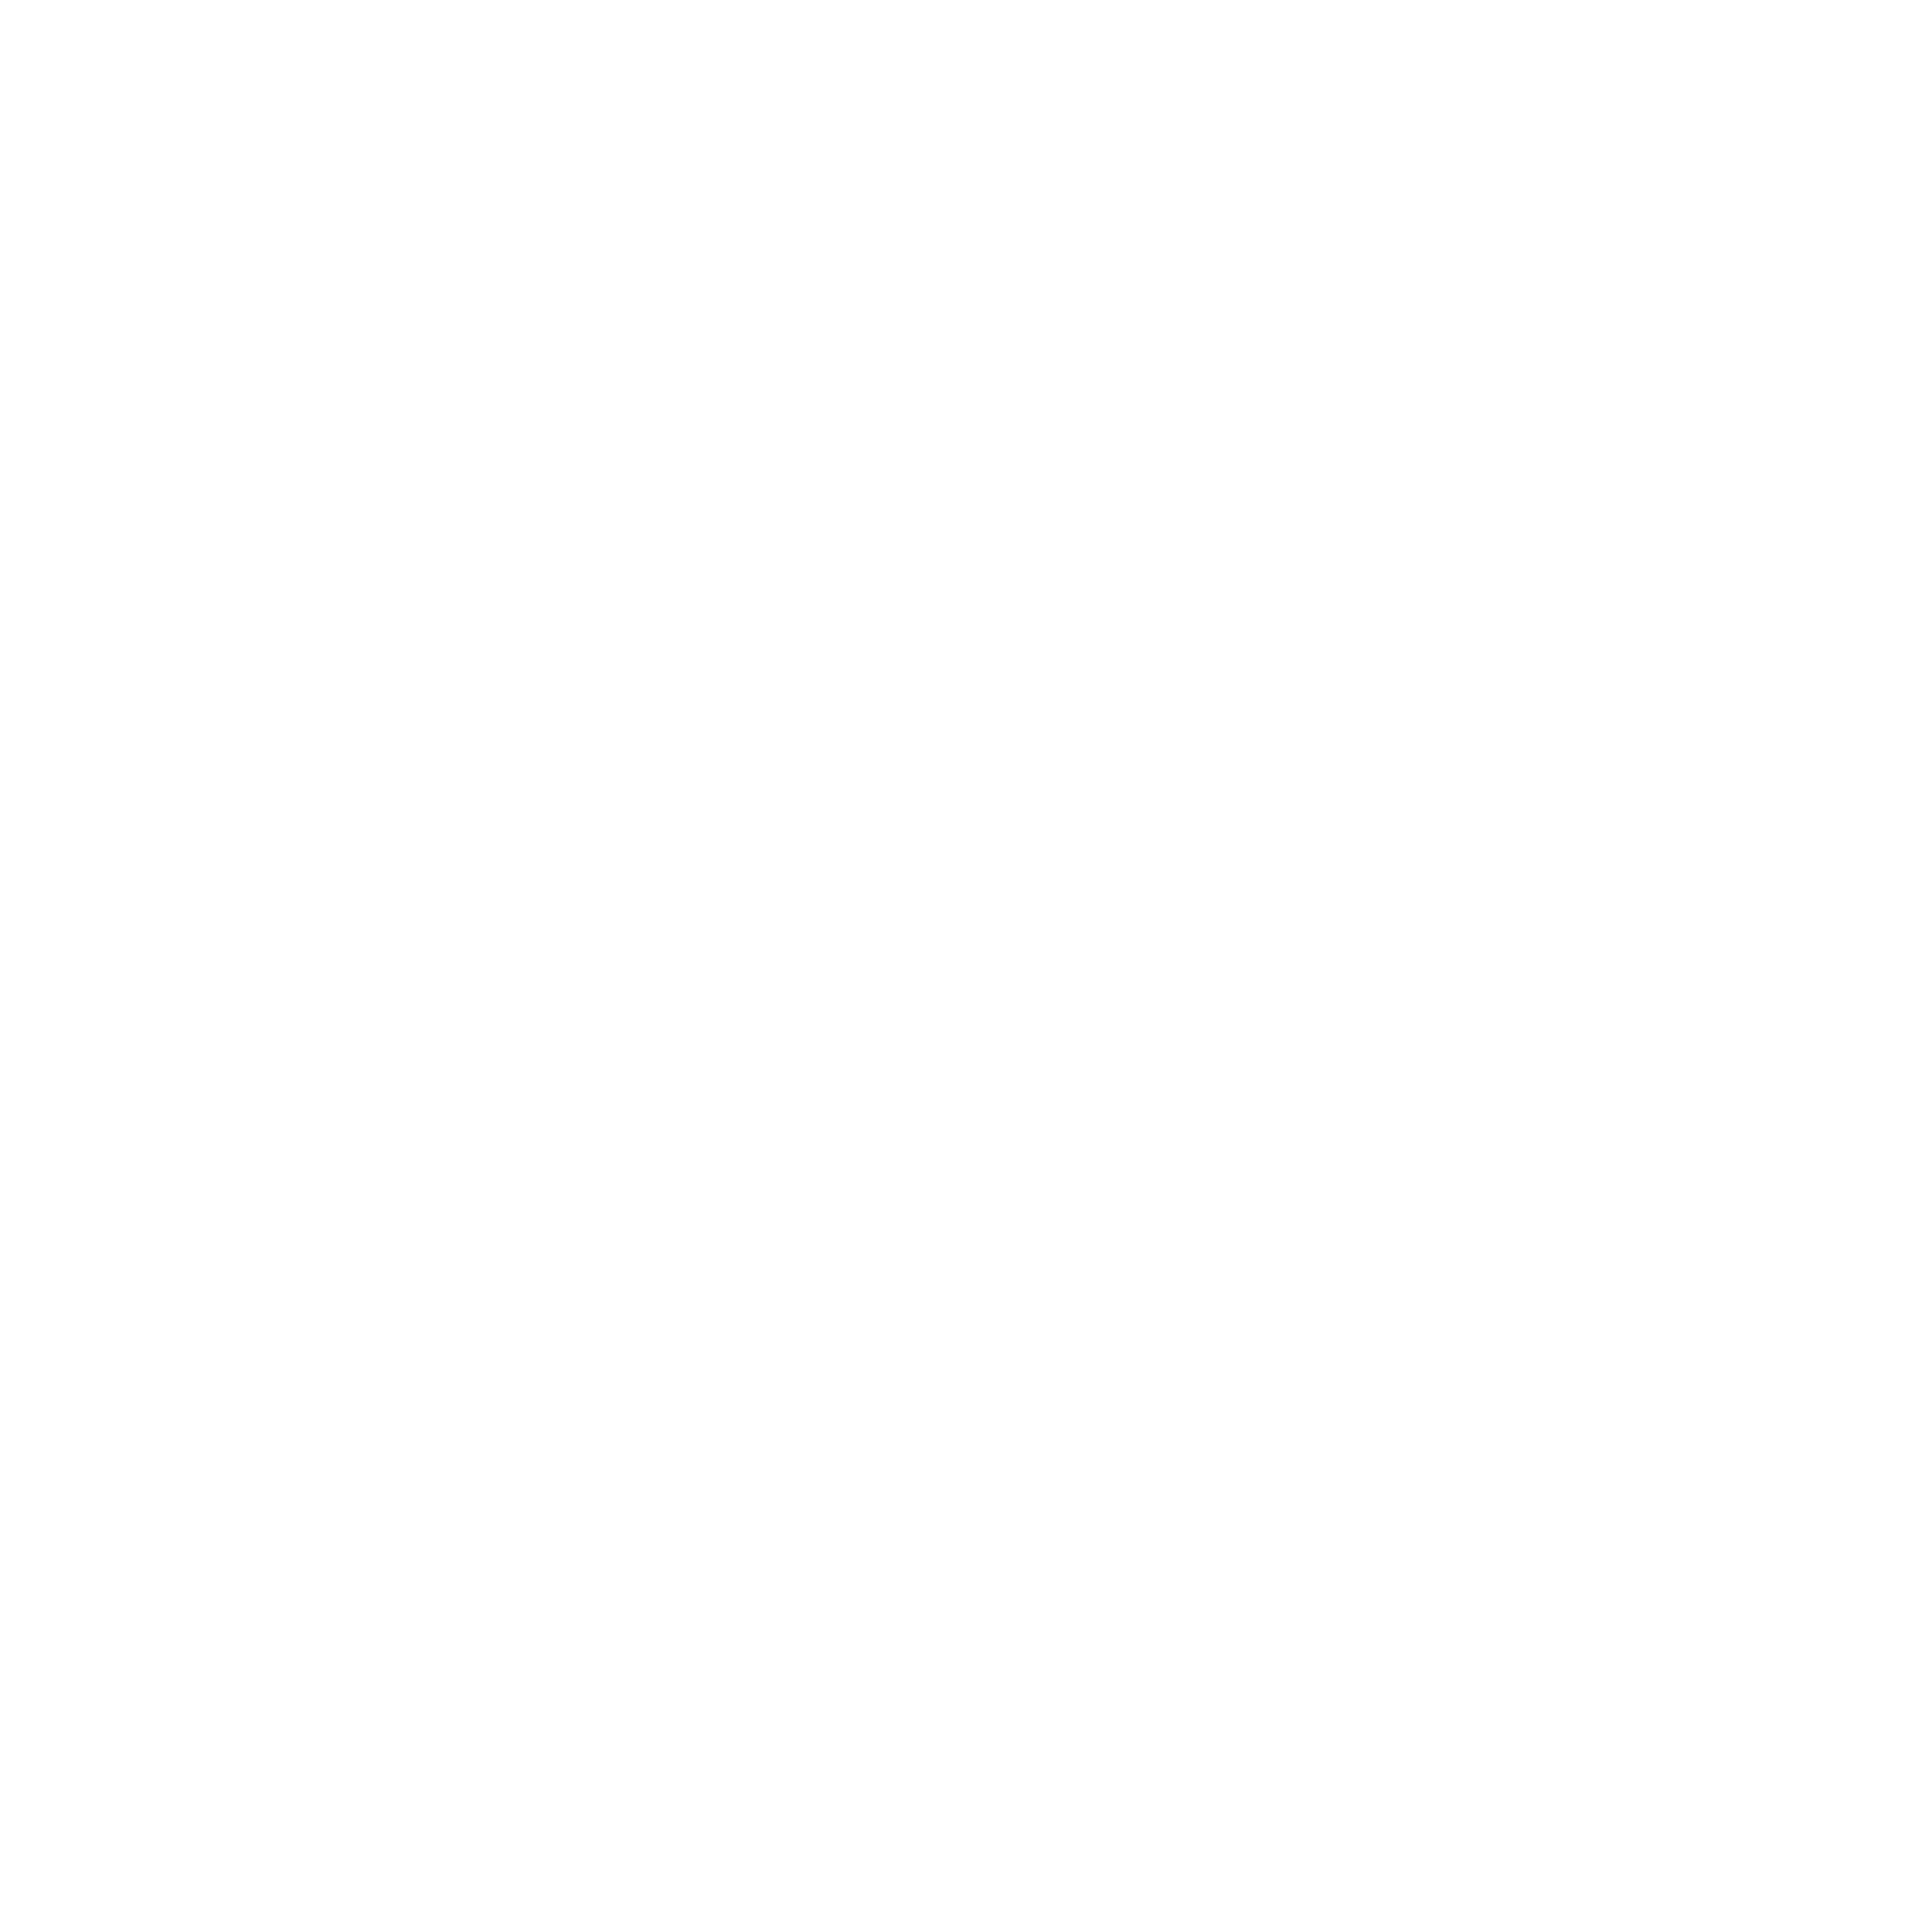 pepsico-logo-black-and-white